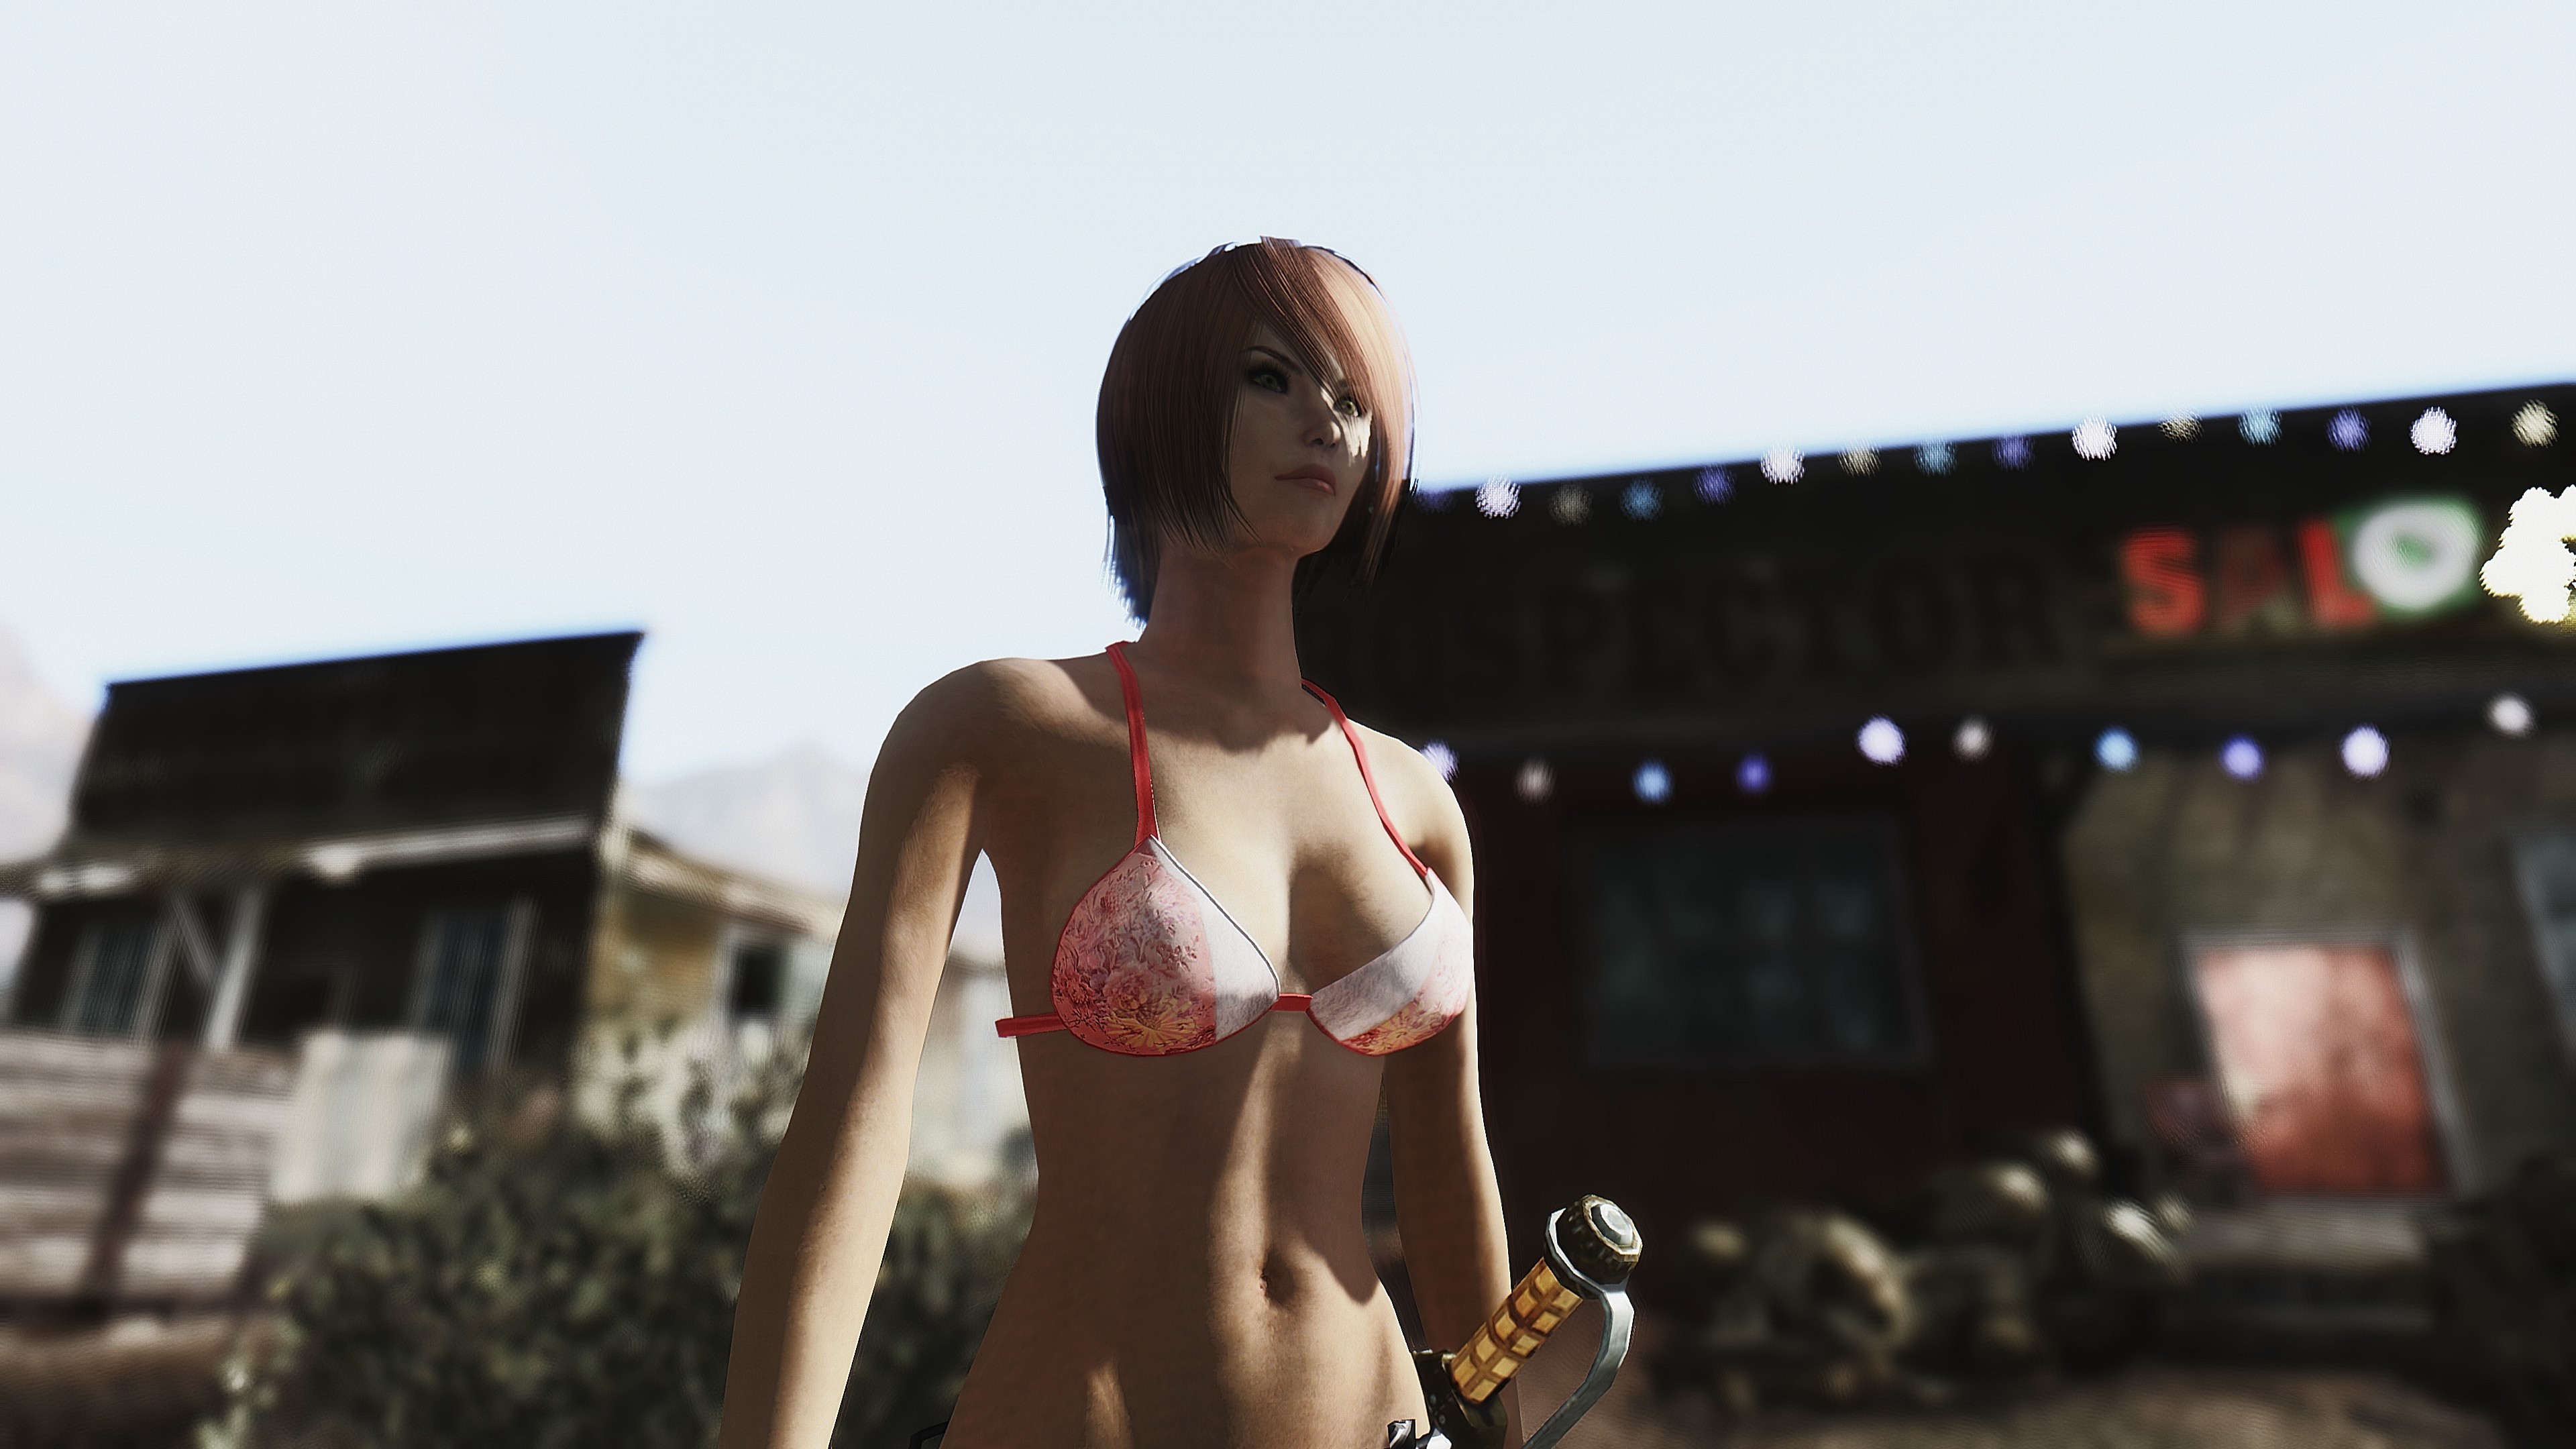 General 3840x2160 Fallout Fallout: New Vegas apocalyptic ENB CGI video game girls video games PC gaming screen shot boobs bikini belly